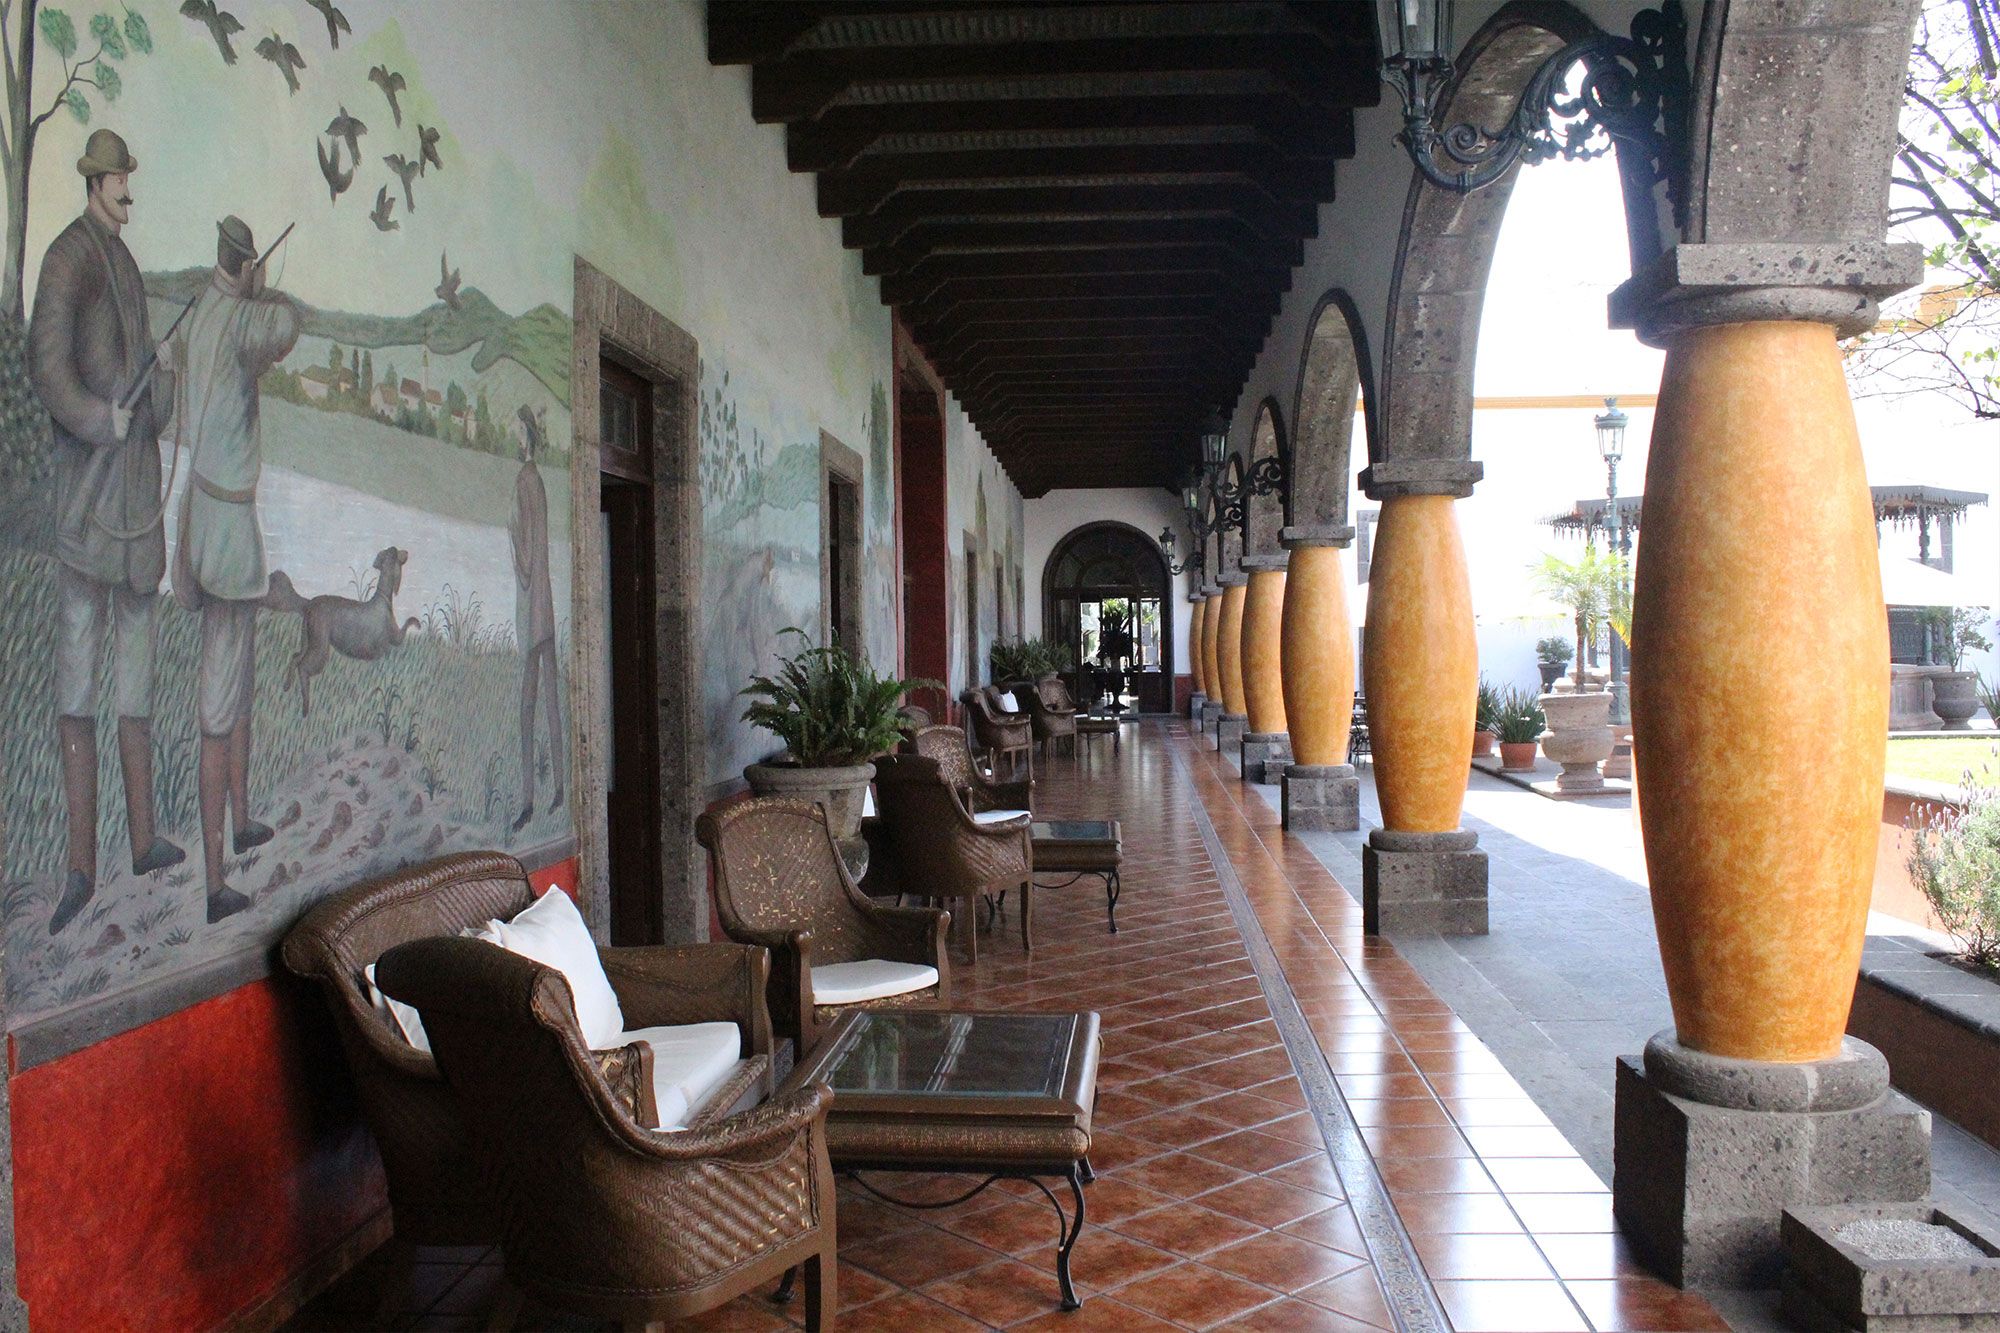 Pasillos - Hotel Hacienda La Venta